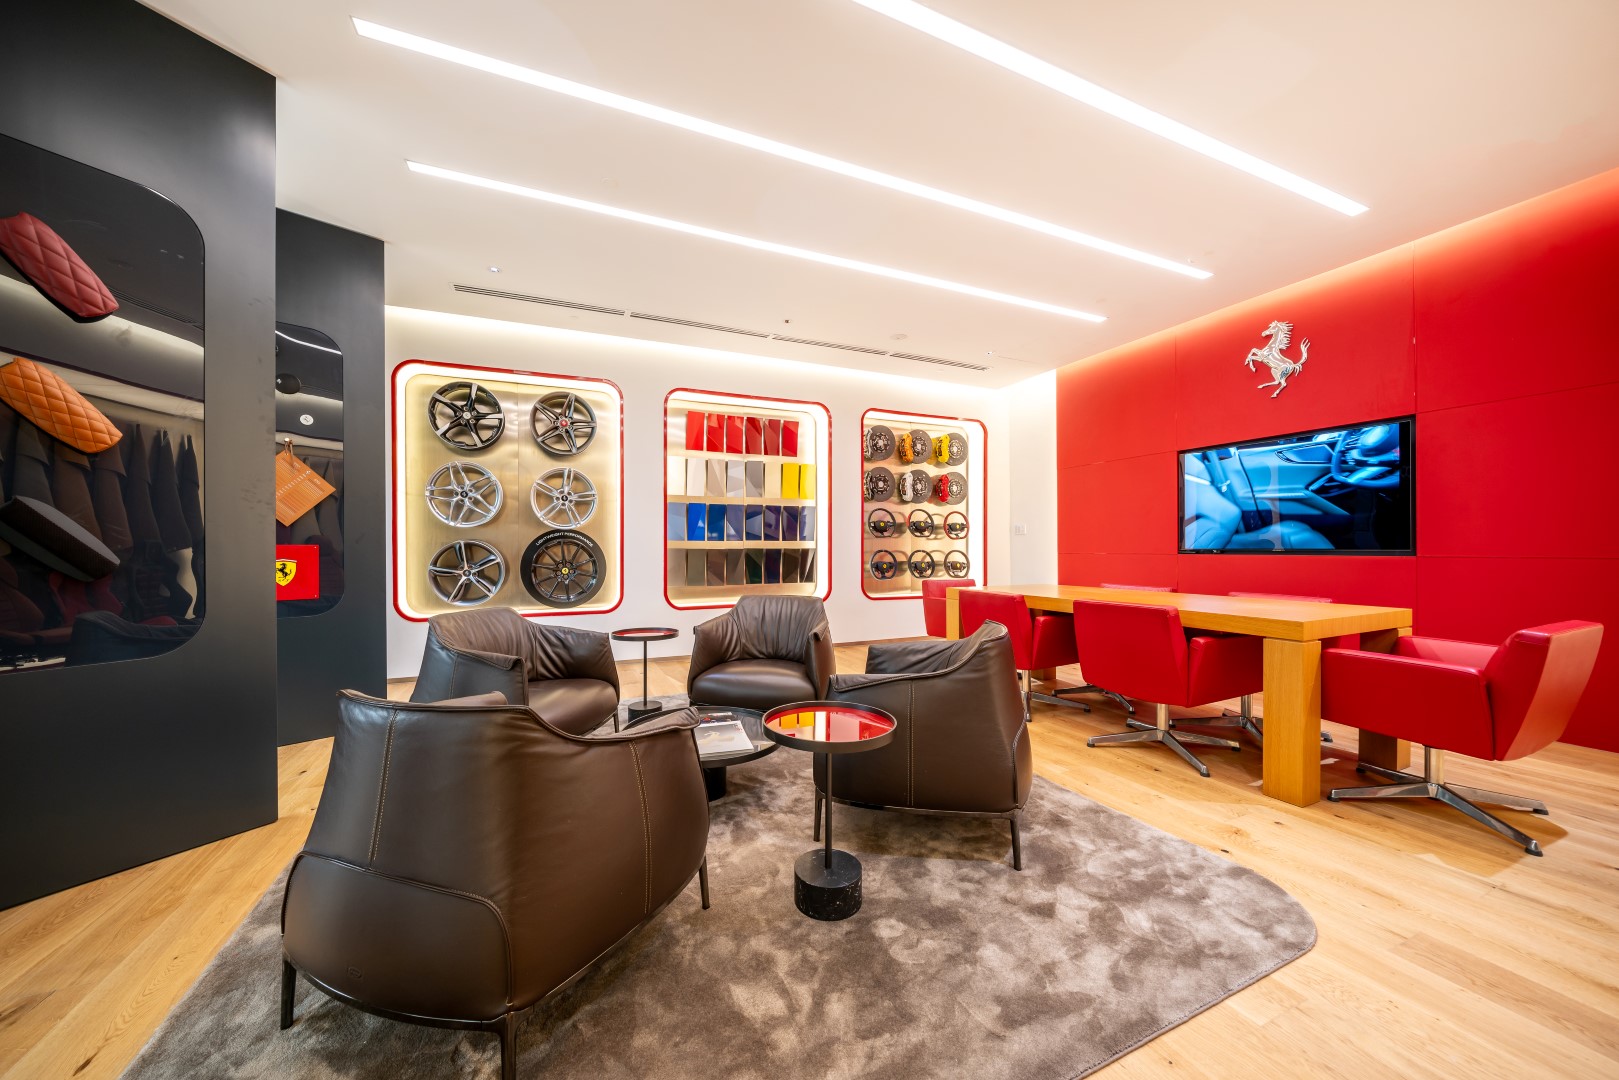 Ferrari opens new showroom next to KLCC